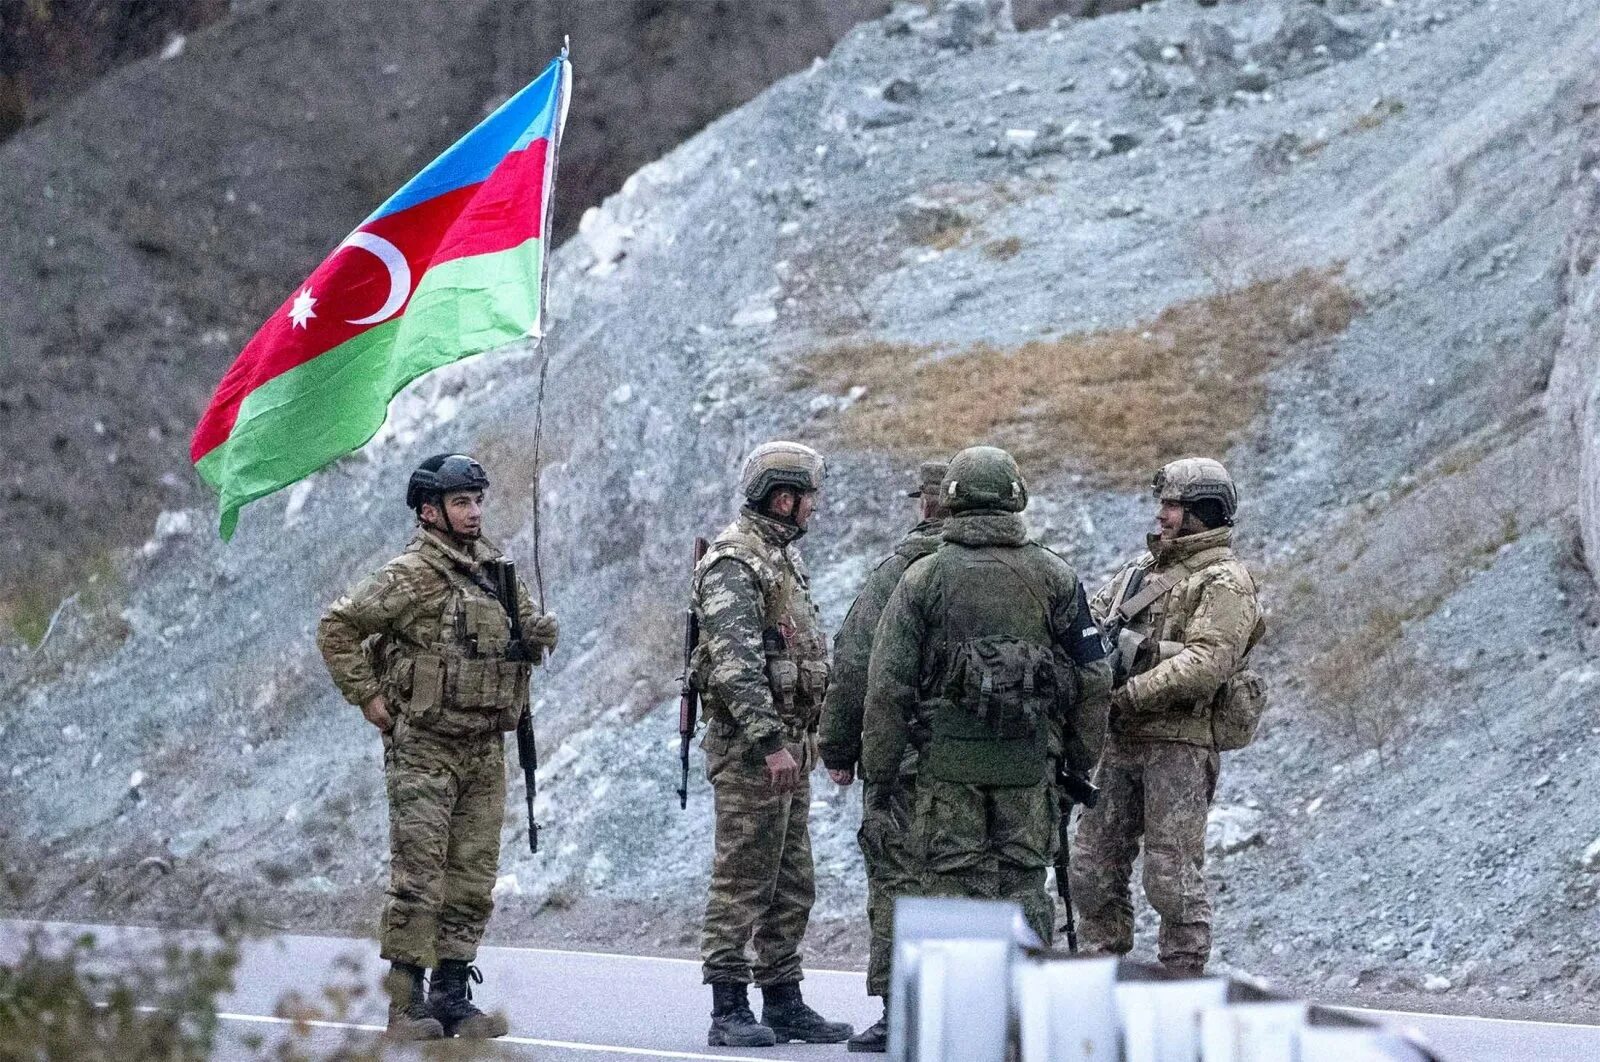 Azeri 2. Азербайджанские войска. Азербайджанские военные. Армения азербайджанские войска. Азербайджанский солдат.